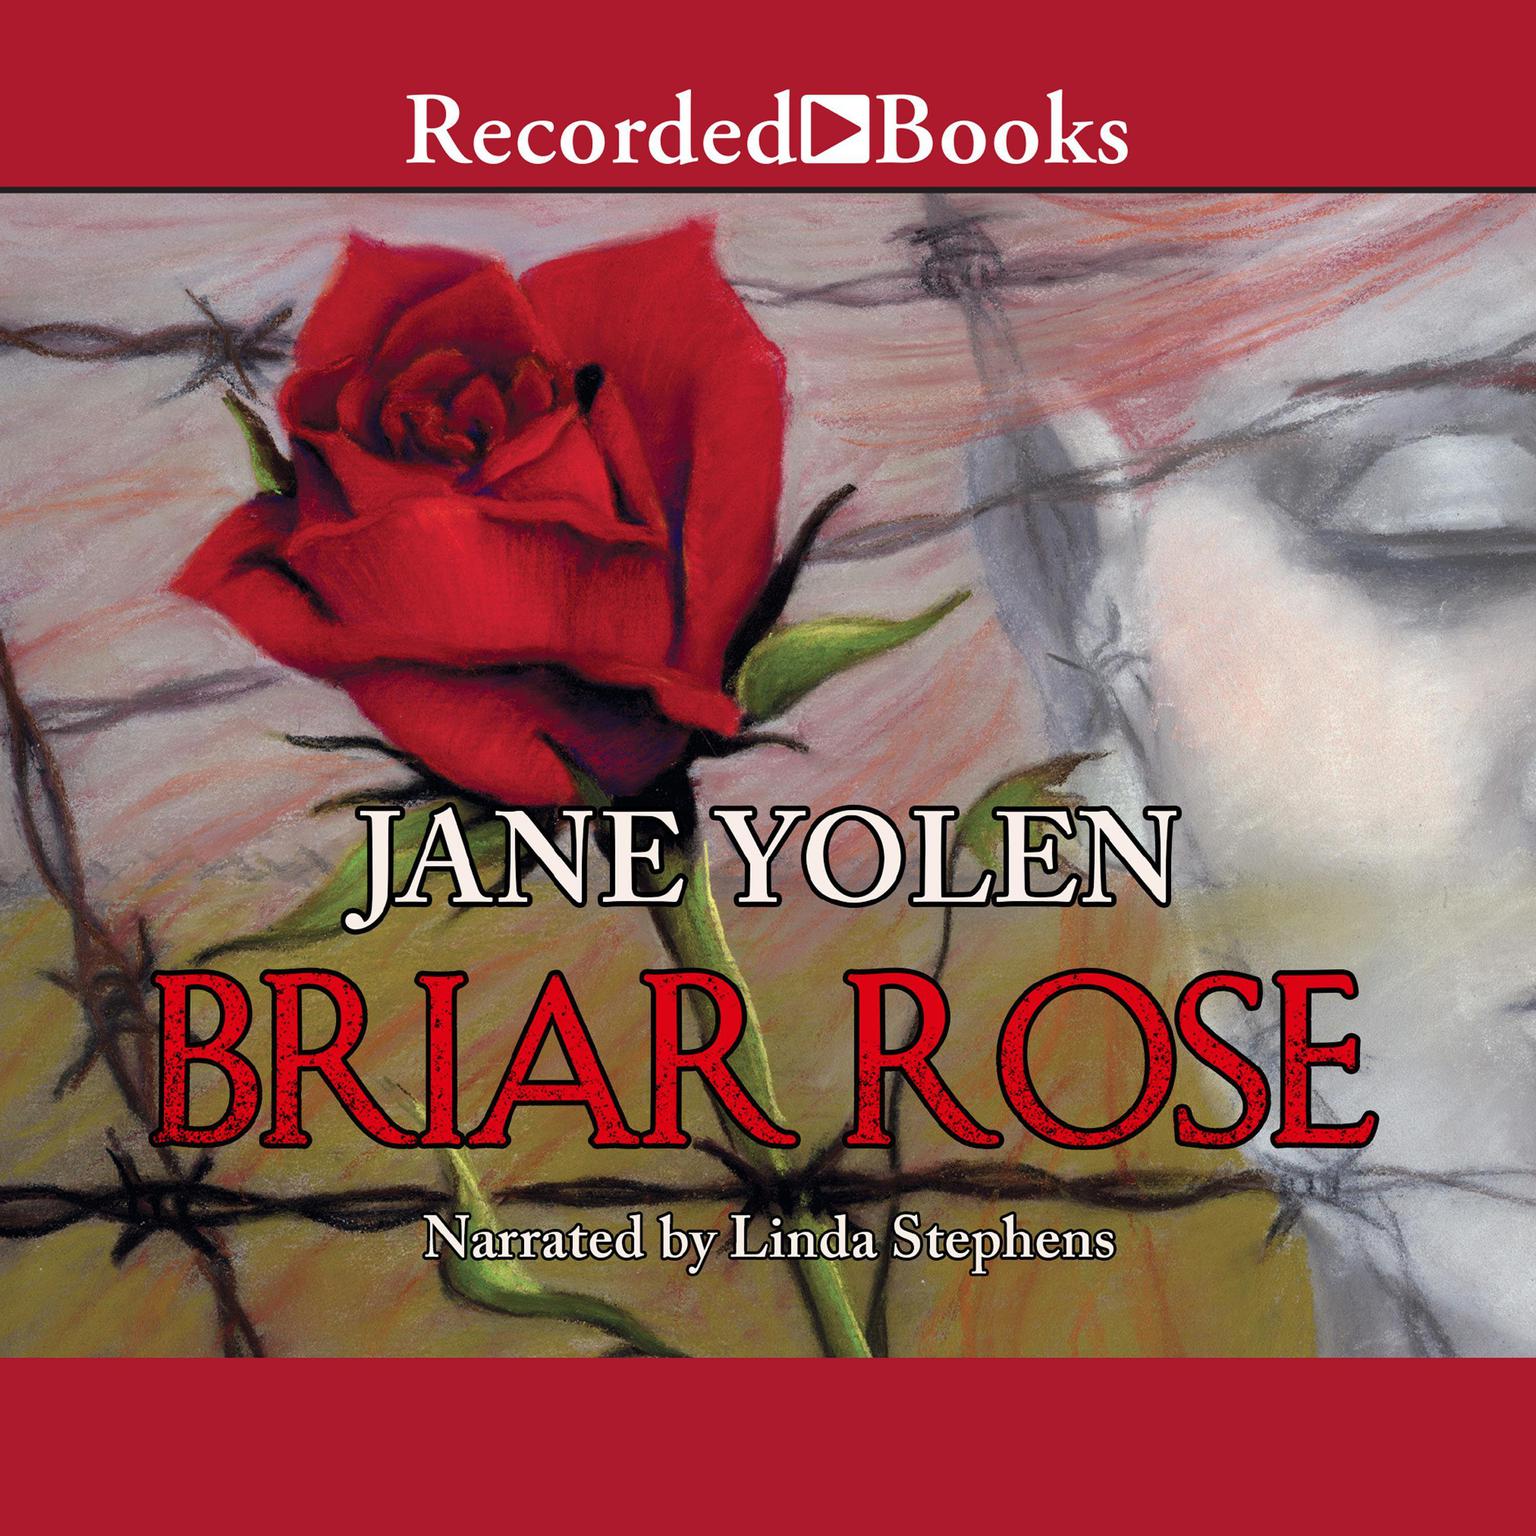 Briar Rose: A Novel of the Holocaust Audiobook, by Jane Yolen